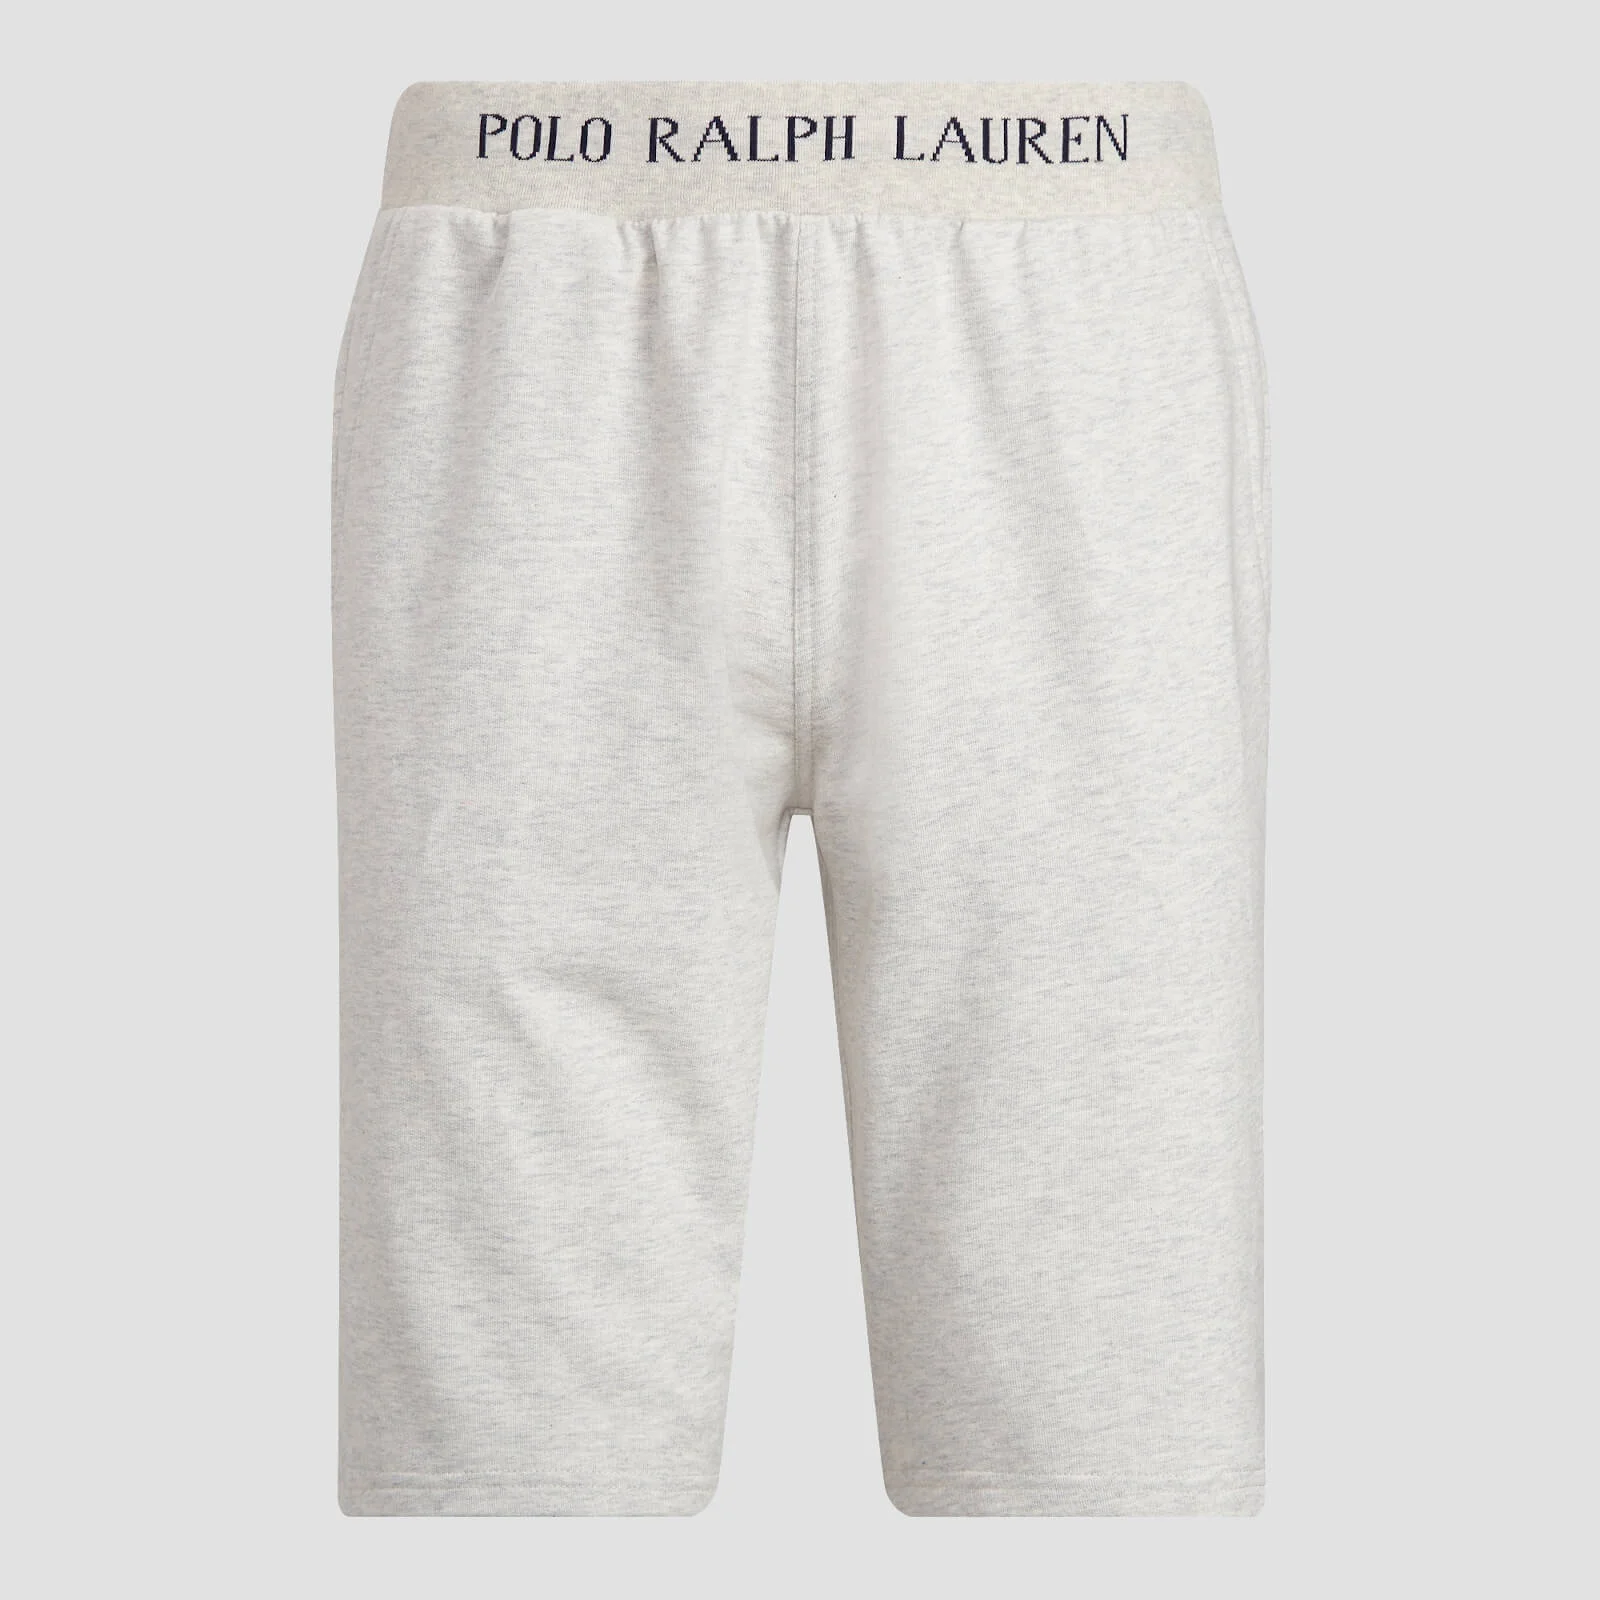 Polo Ralph Lauren Men's Slim Jogger Pants - English Heather Image 1